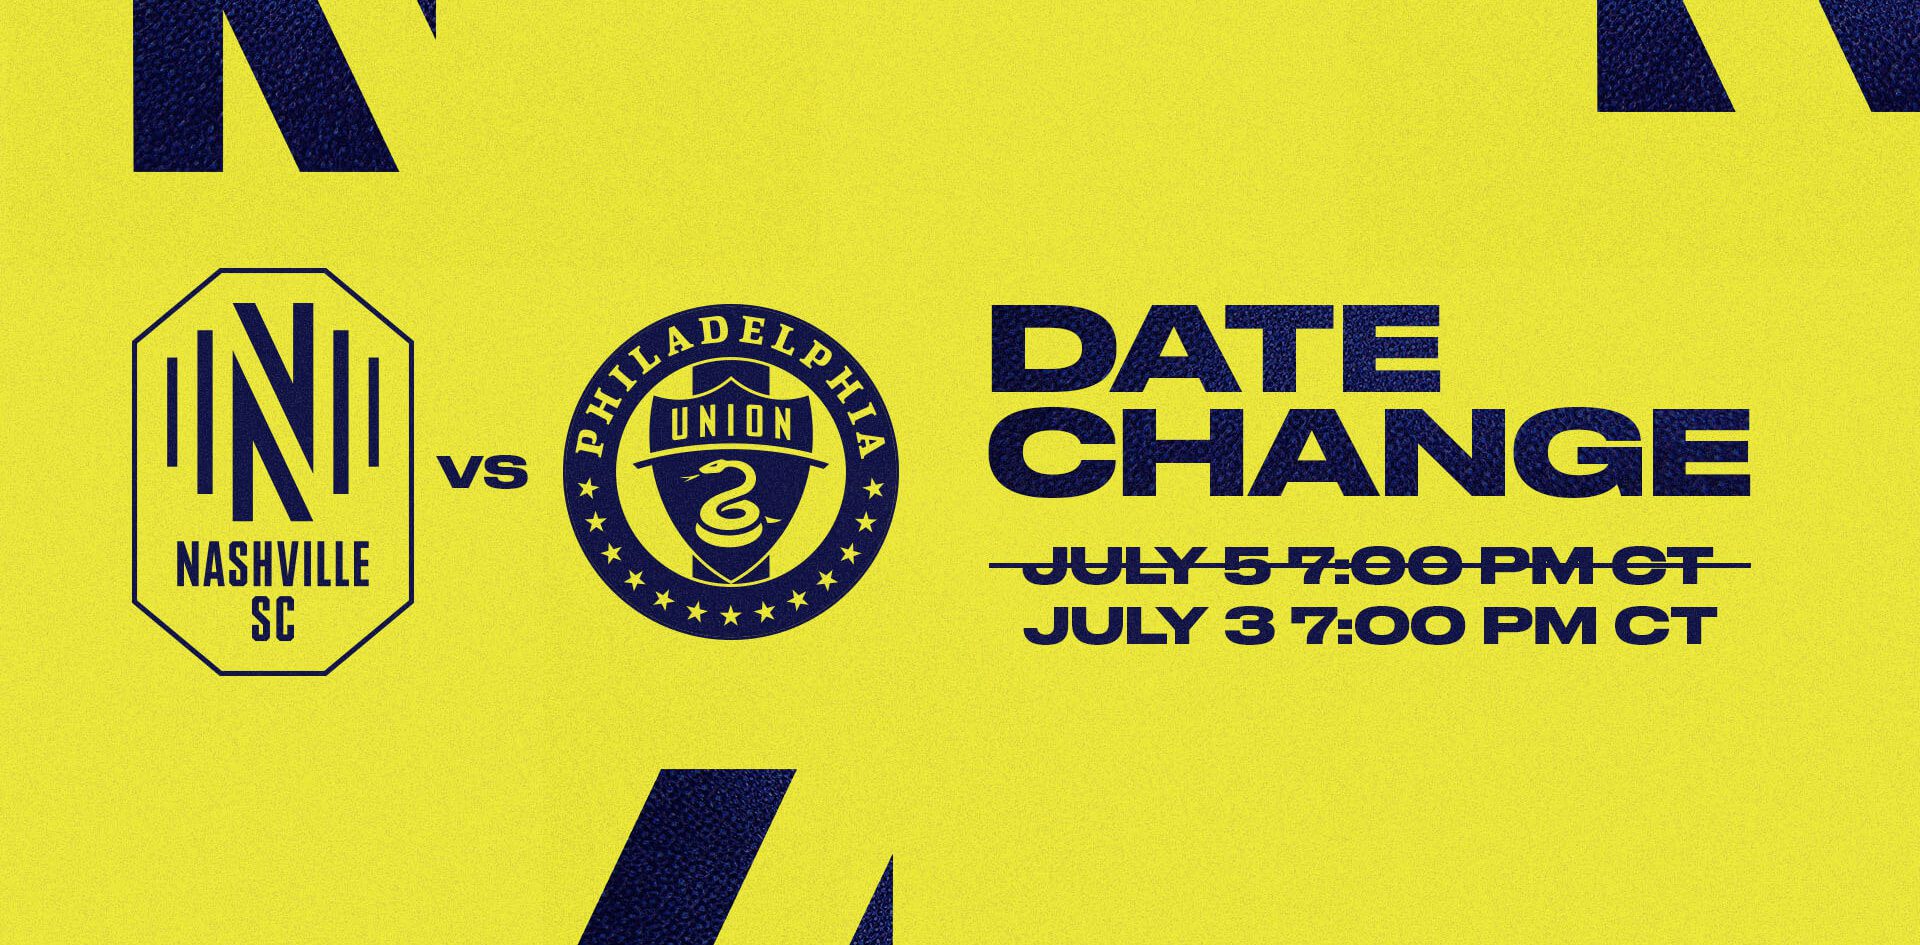 Nashville Soccer Club Announces Schedule Change in Home Match